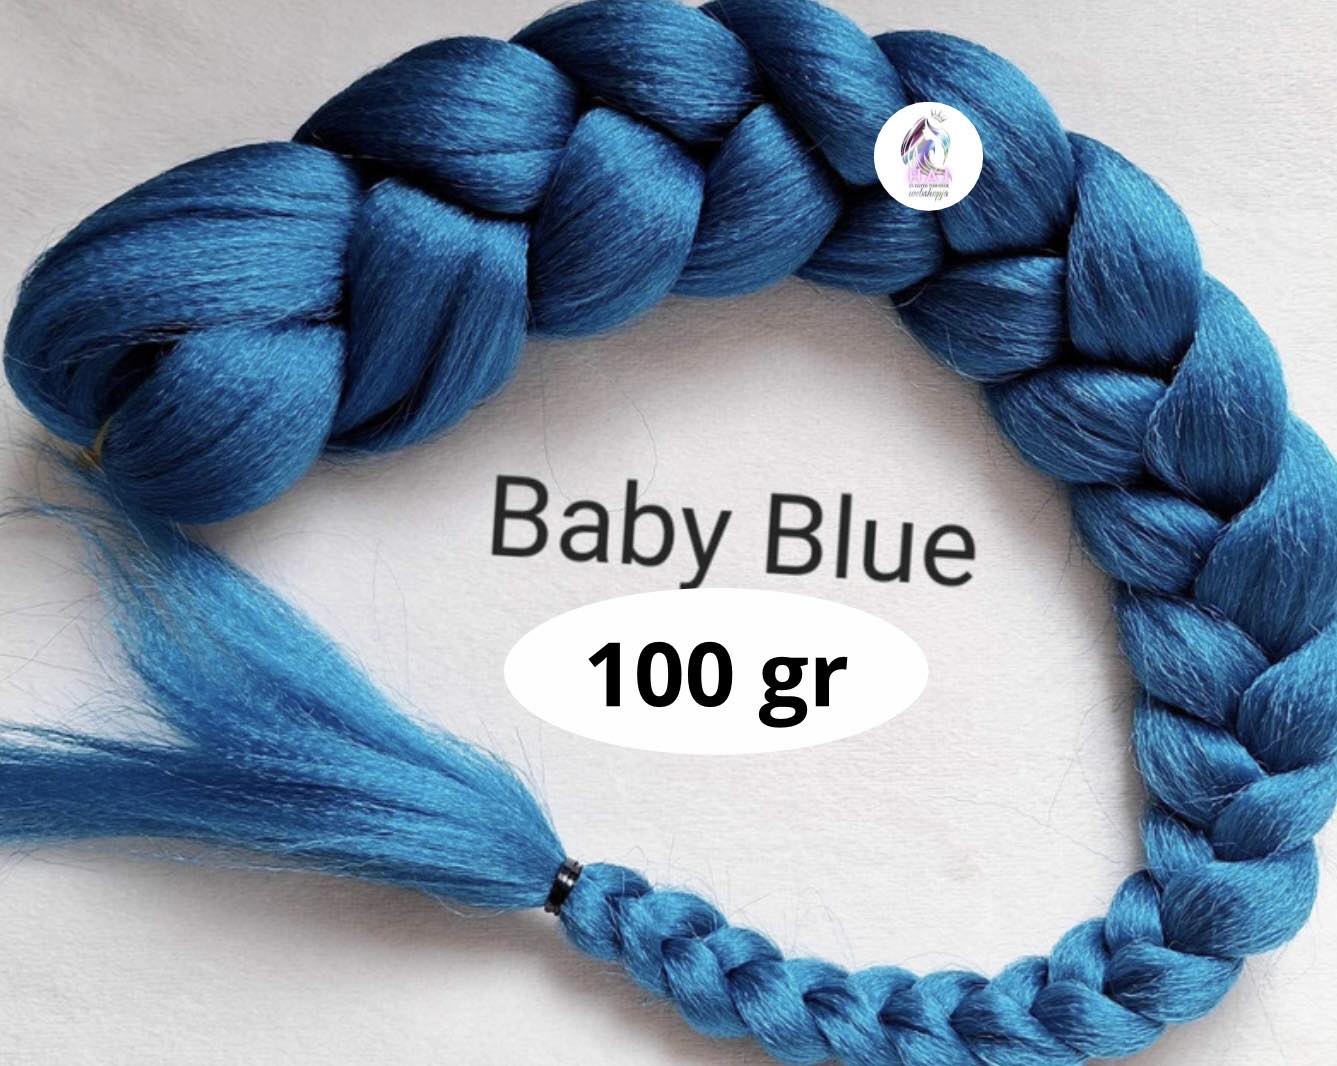 Baby Blue 100 gr - 1.700 Ft